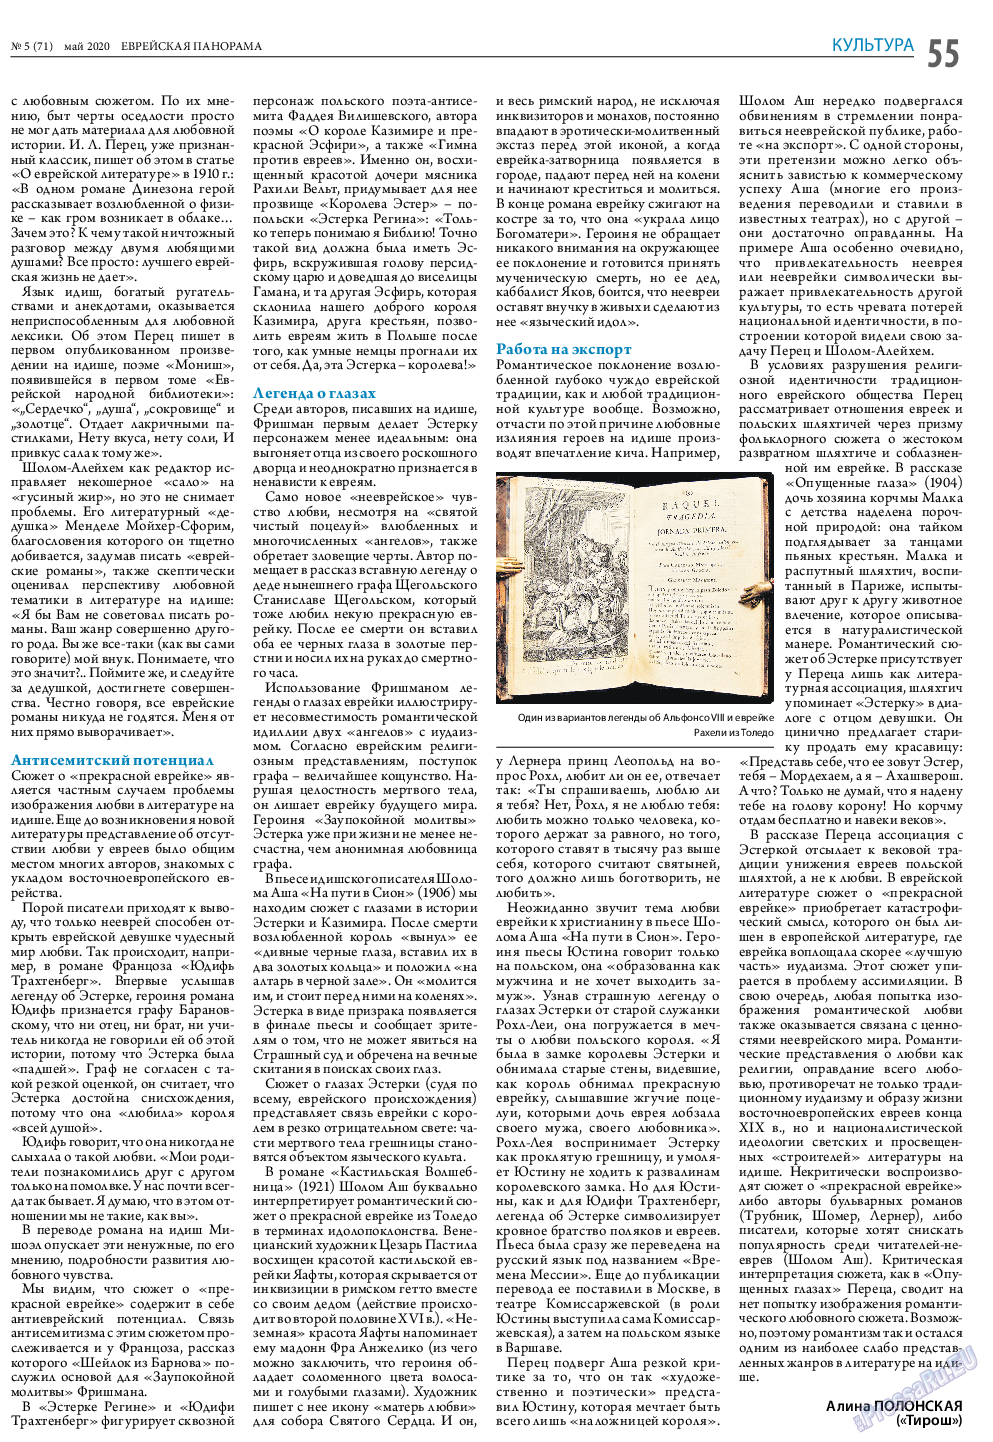 Еврейская панорама, газета. 2020 №5 стр.55